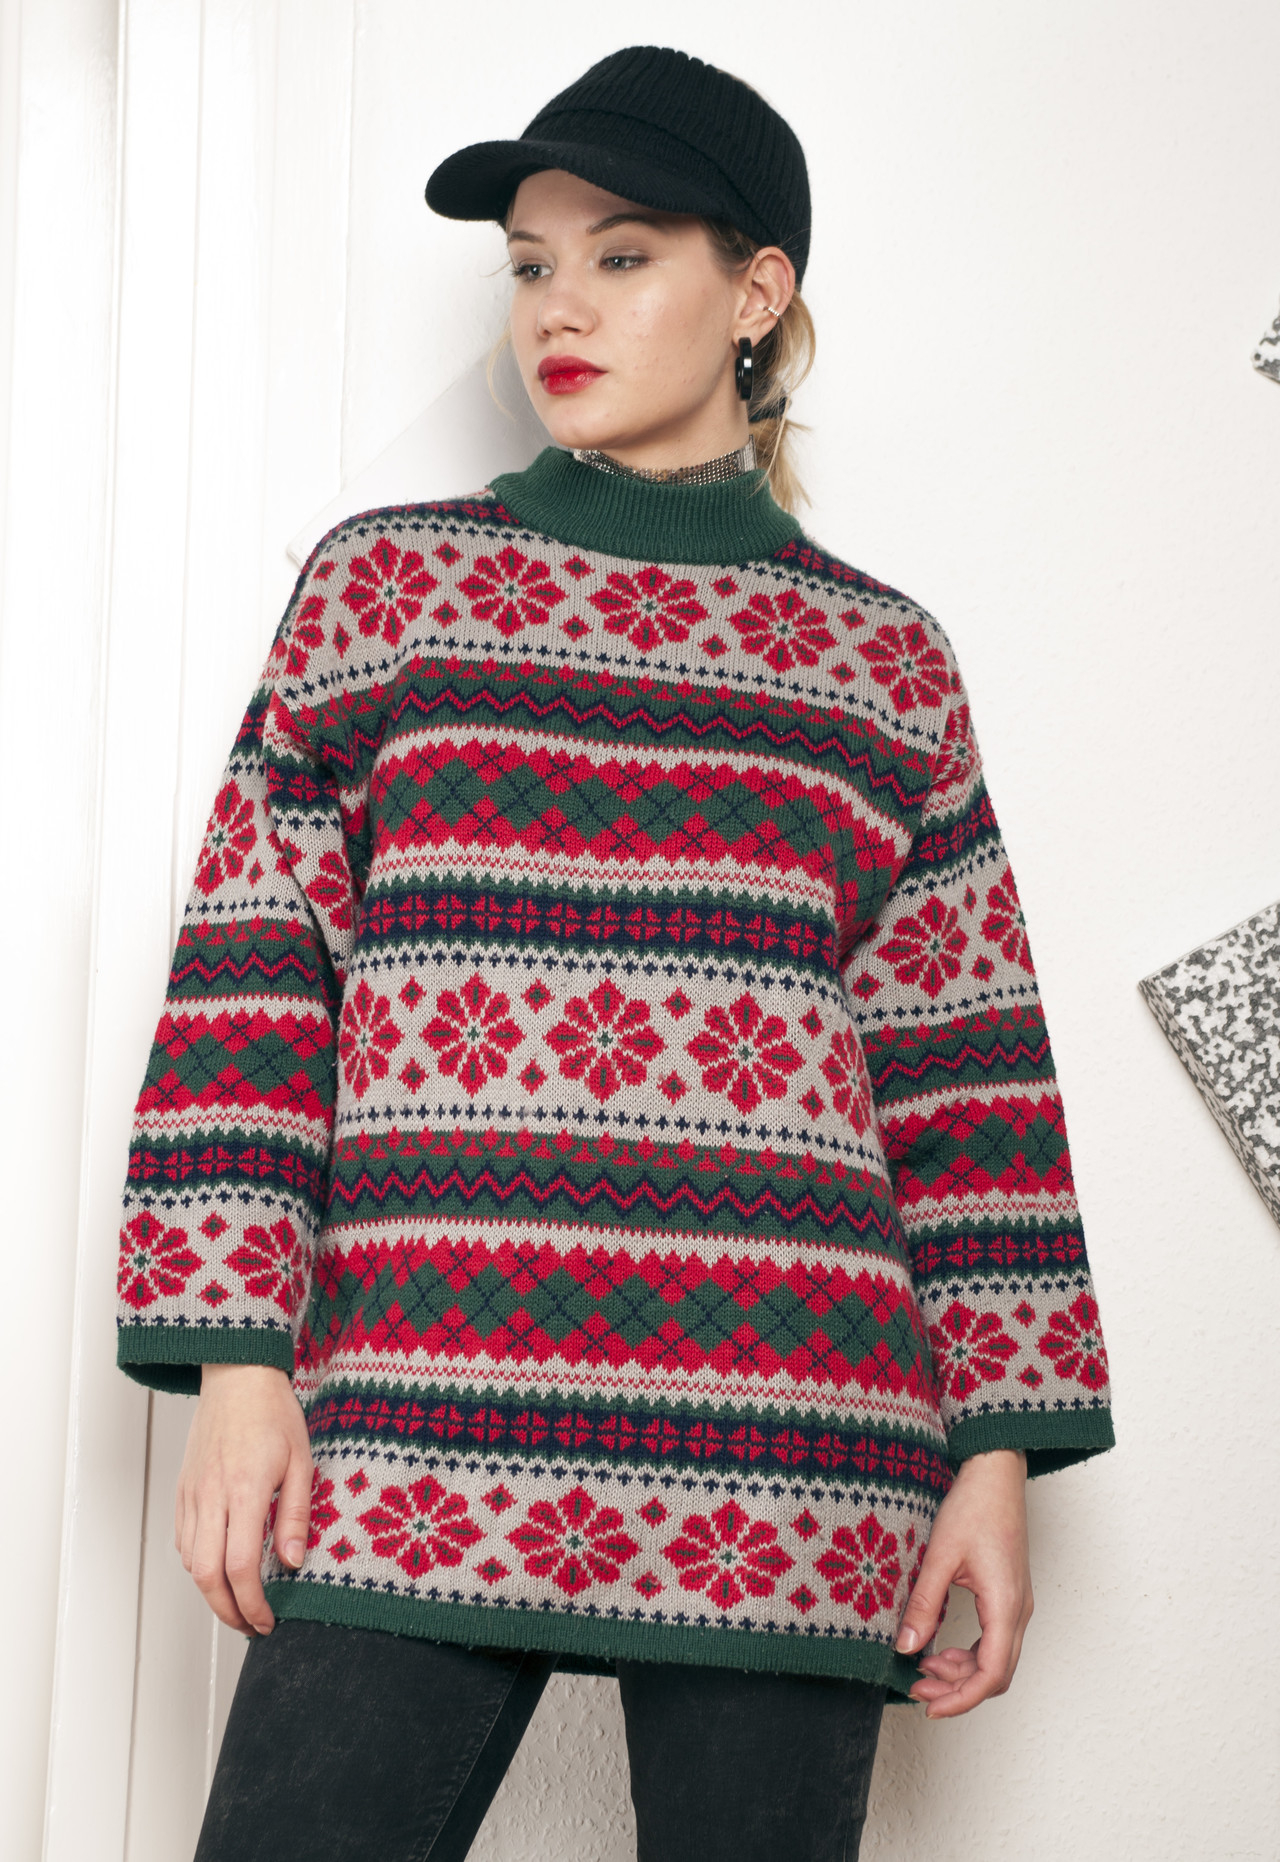 Retro Christmas Jumper Knitting Patterns Knit Xmas Jumper 90s Vintage Sweater